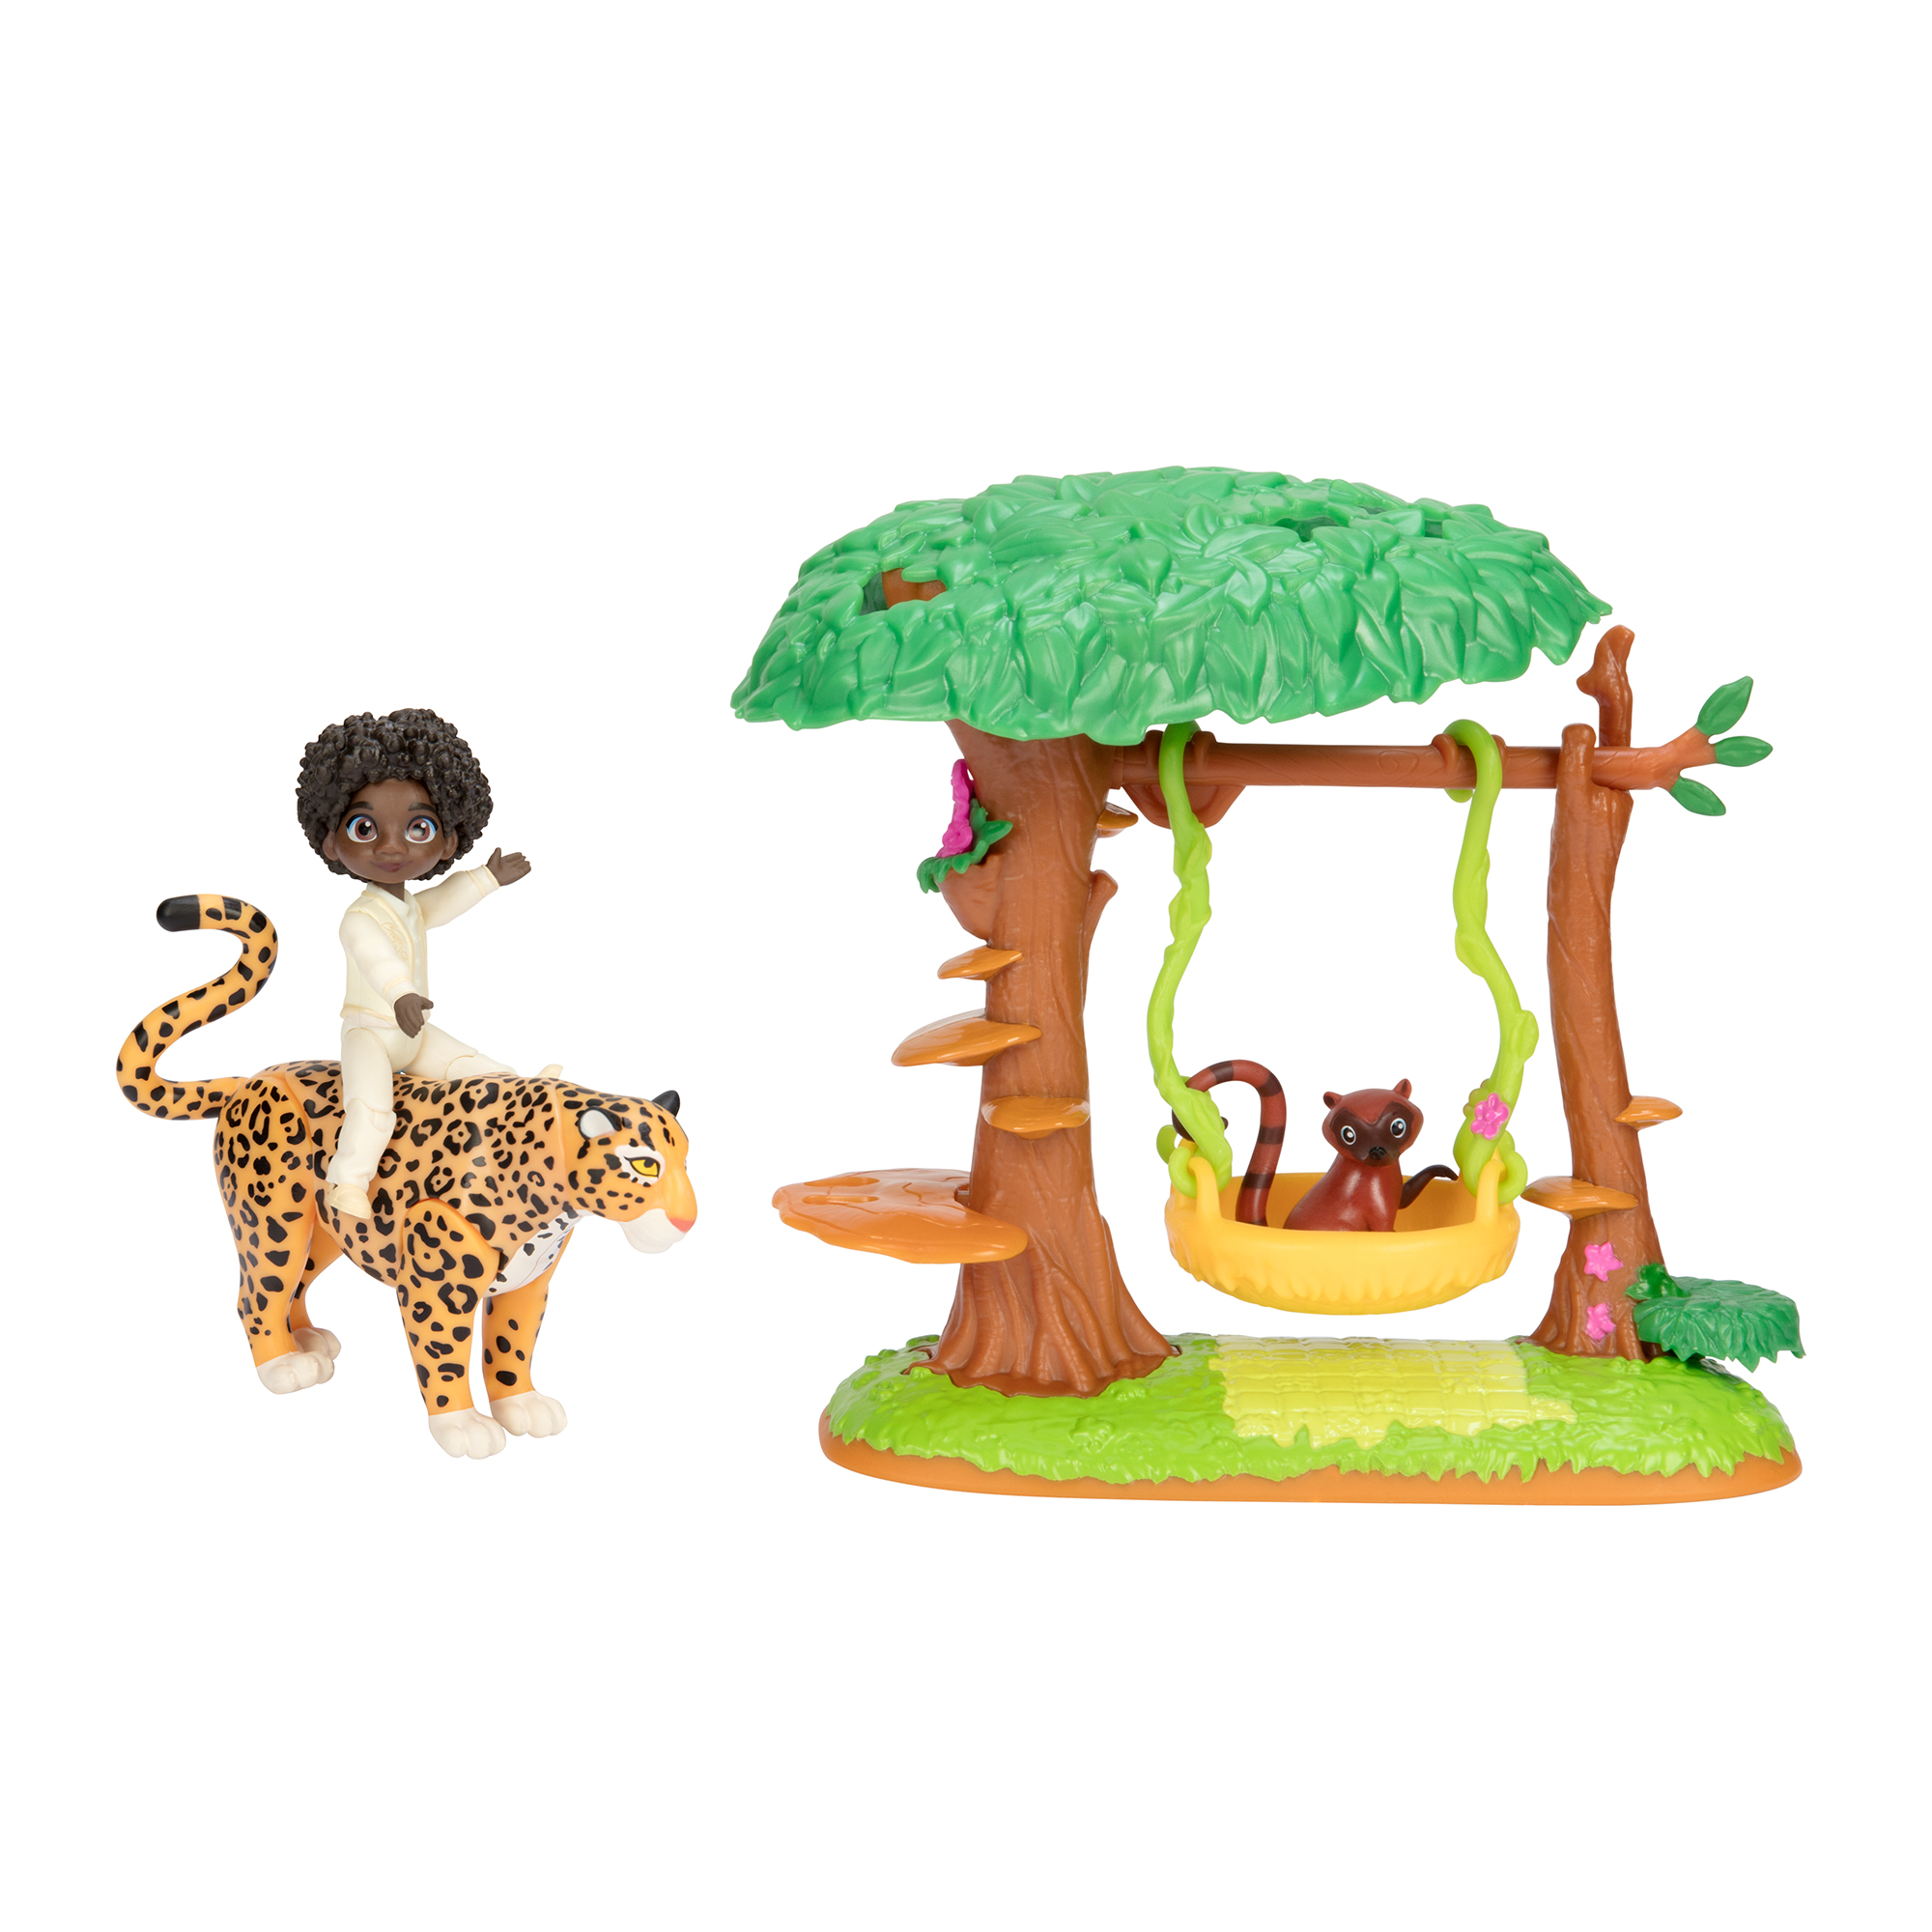 Disney Encanto Antonio's Step & Swing Small Doll Playset, Includes 3 Accessories